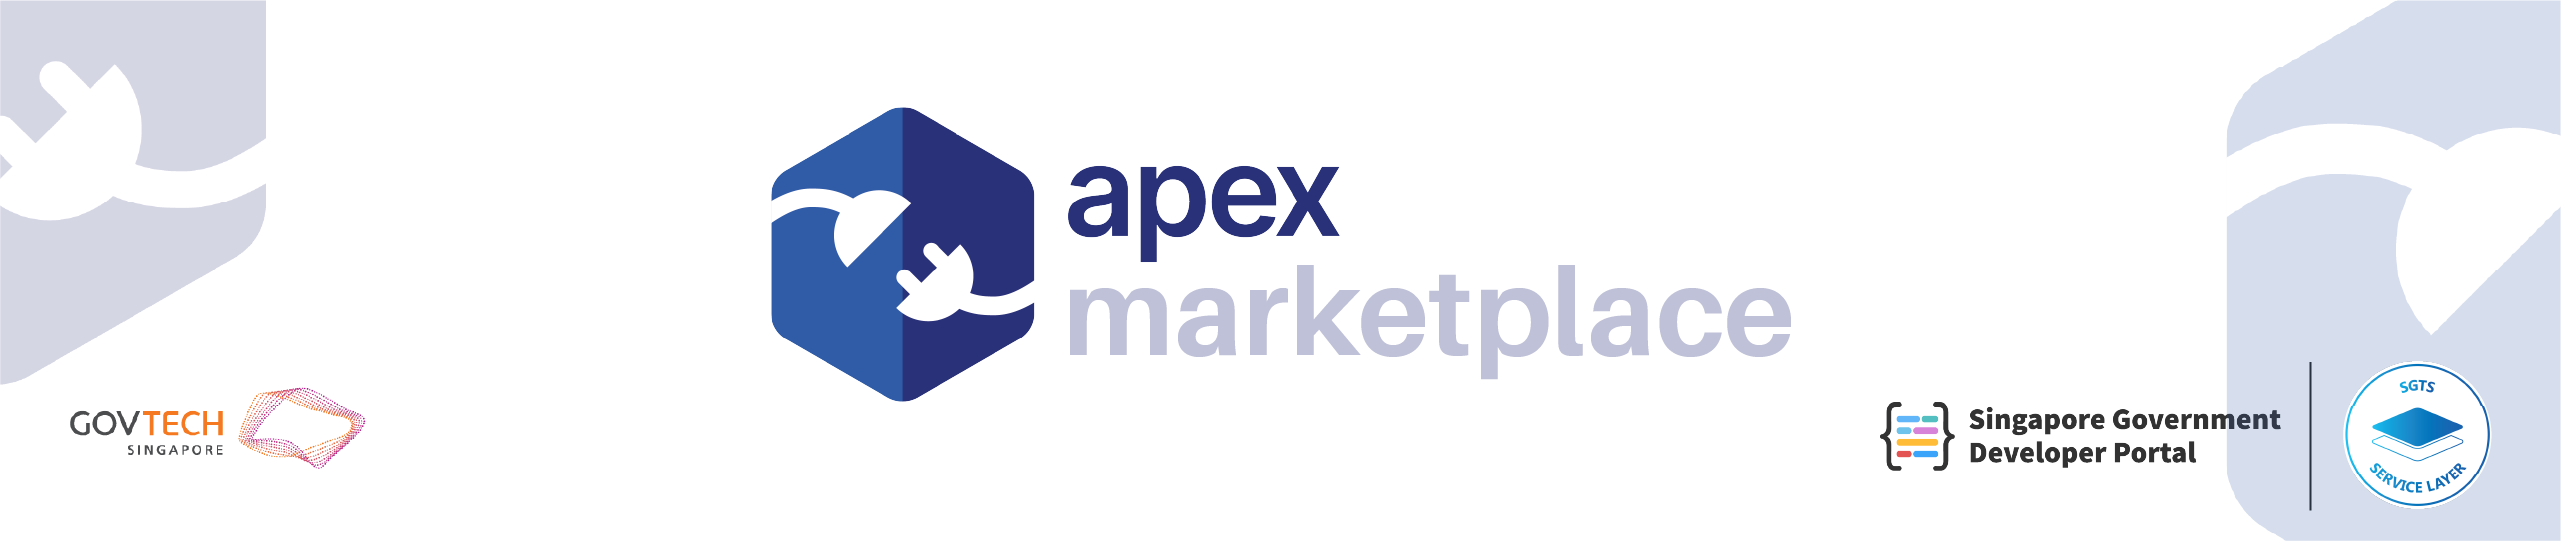 APEX Marketplace header banner